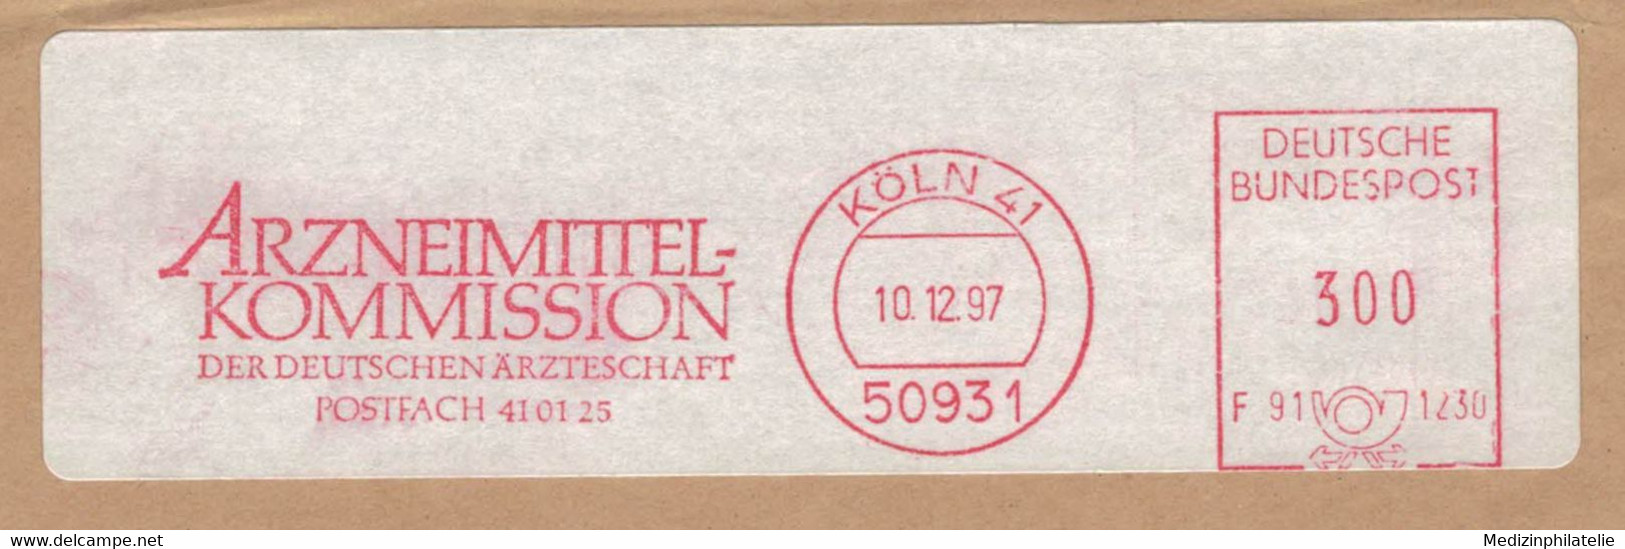 Arzneimittel-Kommission Deutsche Ärzteschaft  50931 Köln 1997 - Pharmacy